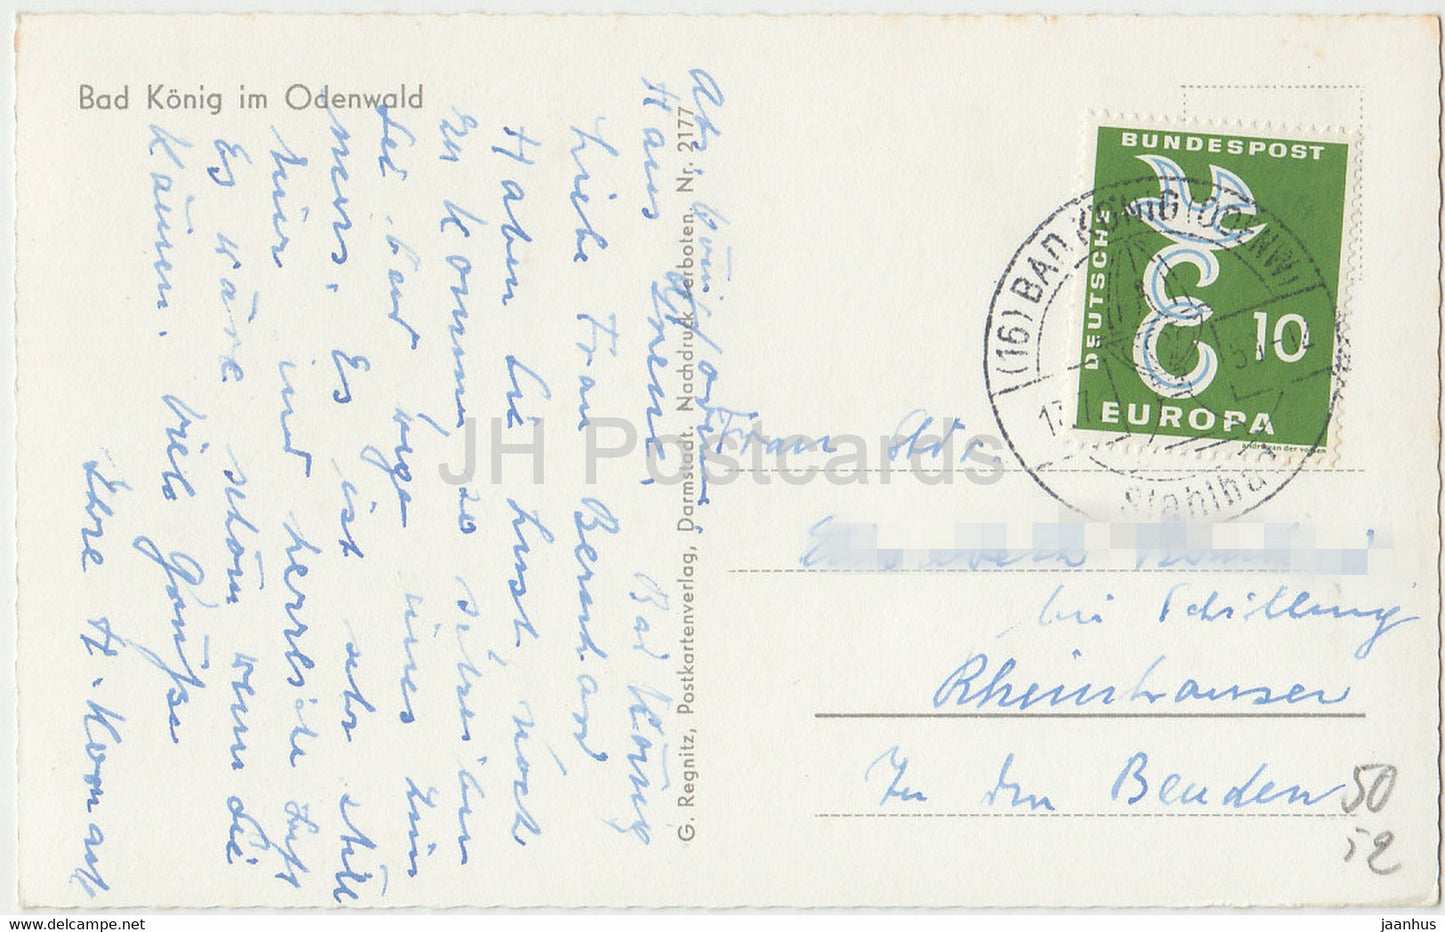 Bad Konig im Odenwald - 2177 - old postcard - 1950s - Germany - used